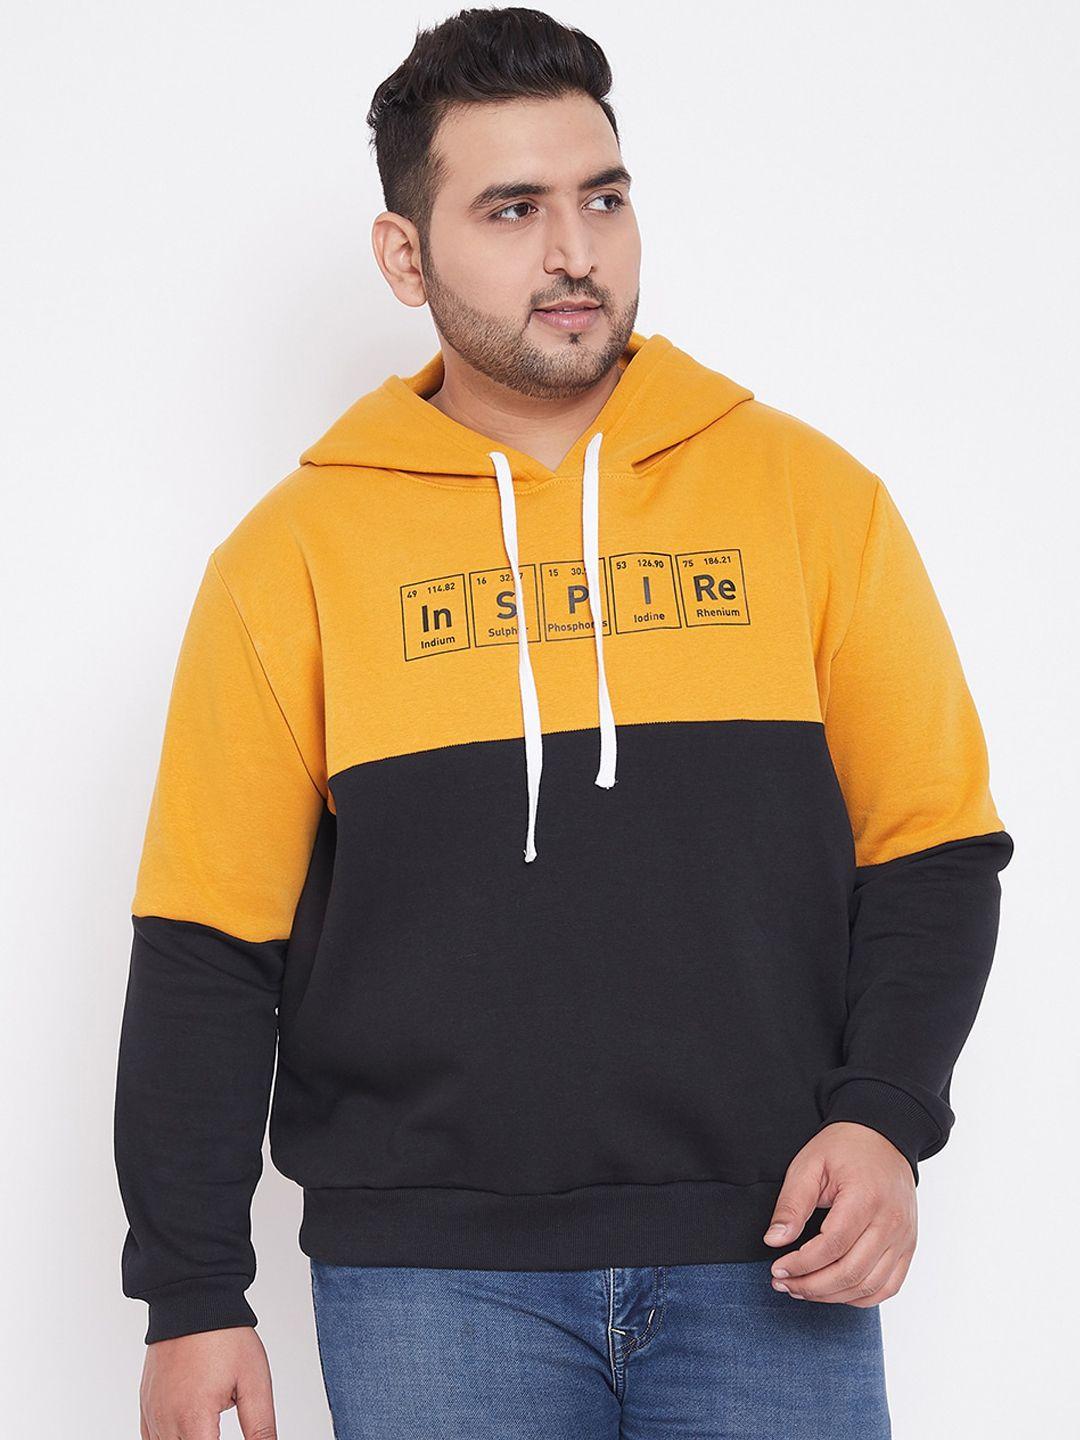 instafab-plus-men-yellow-&-black-colourblocked-hooded-sweatshirt